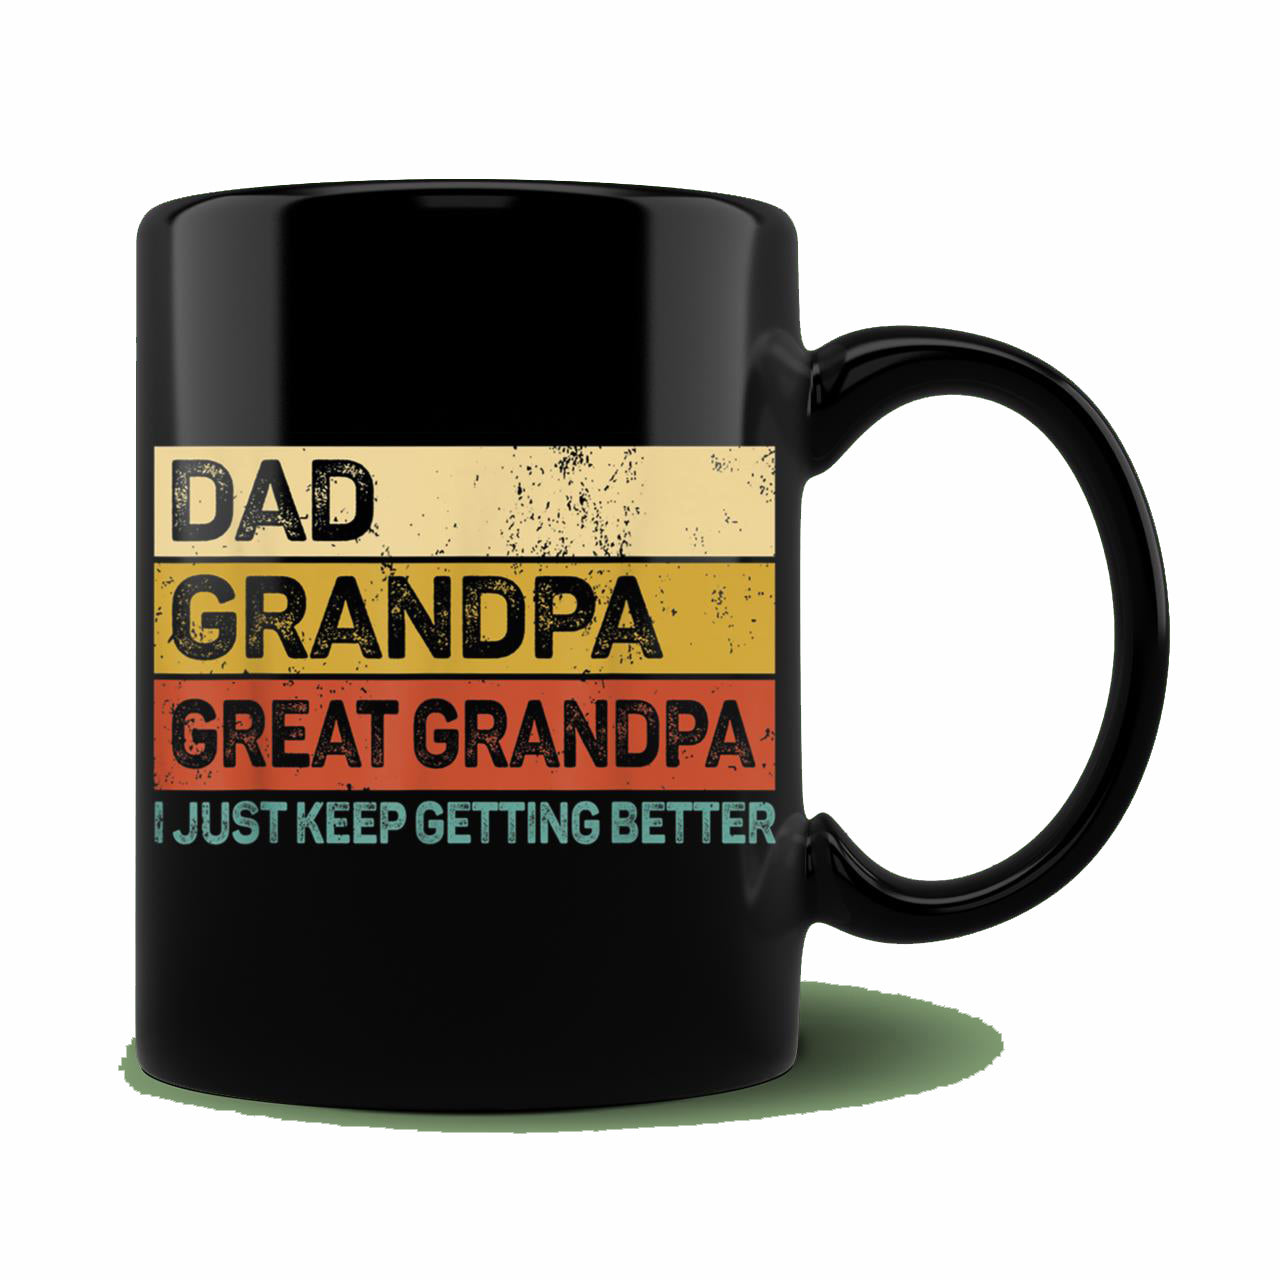 Skitongift Ceramic Novelty Coffee Mug Fathers Day Gifts For Husband Mens Fathers Day Gift From Grandkids Dad Grandpa Great Grandpa Mug